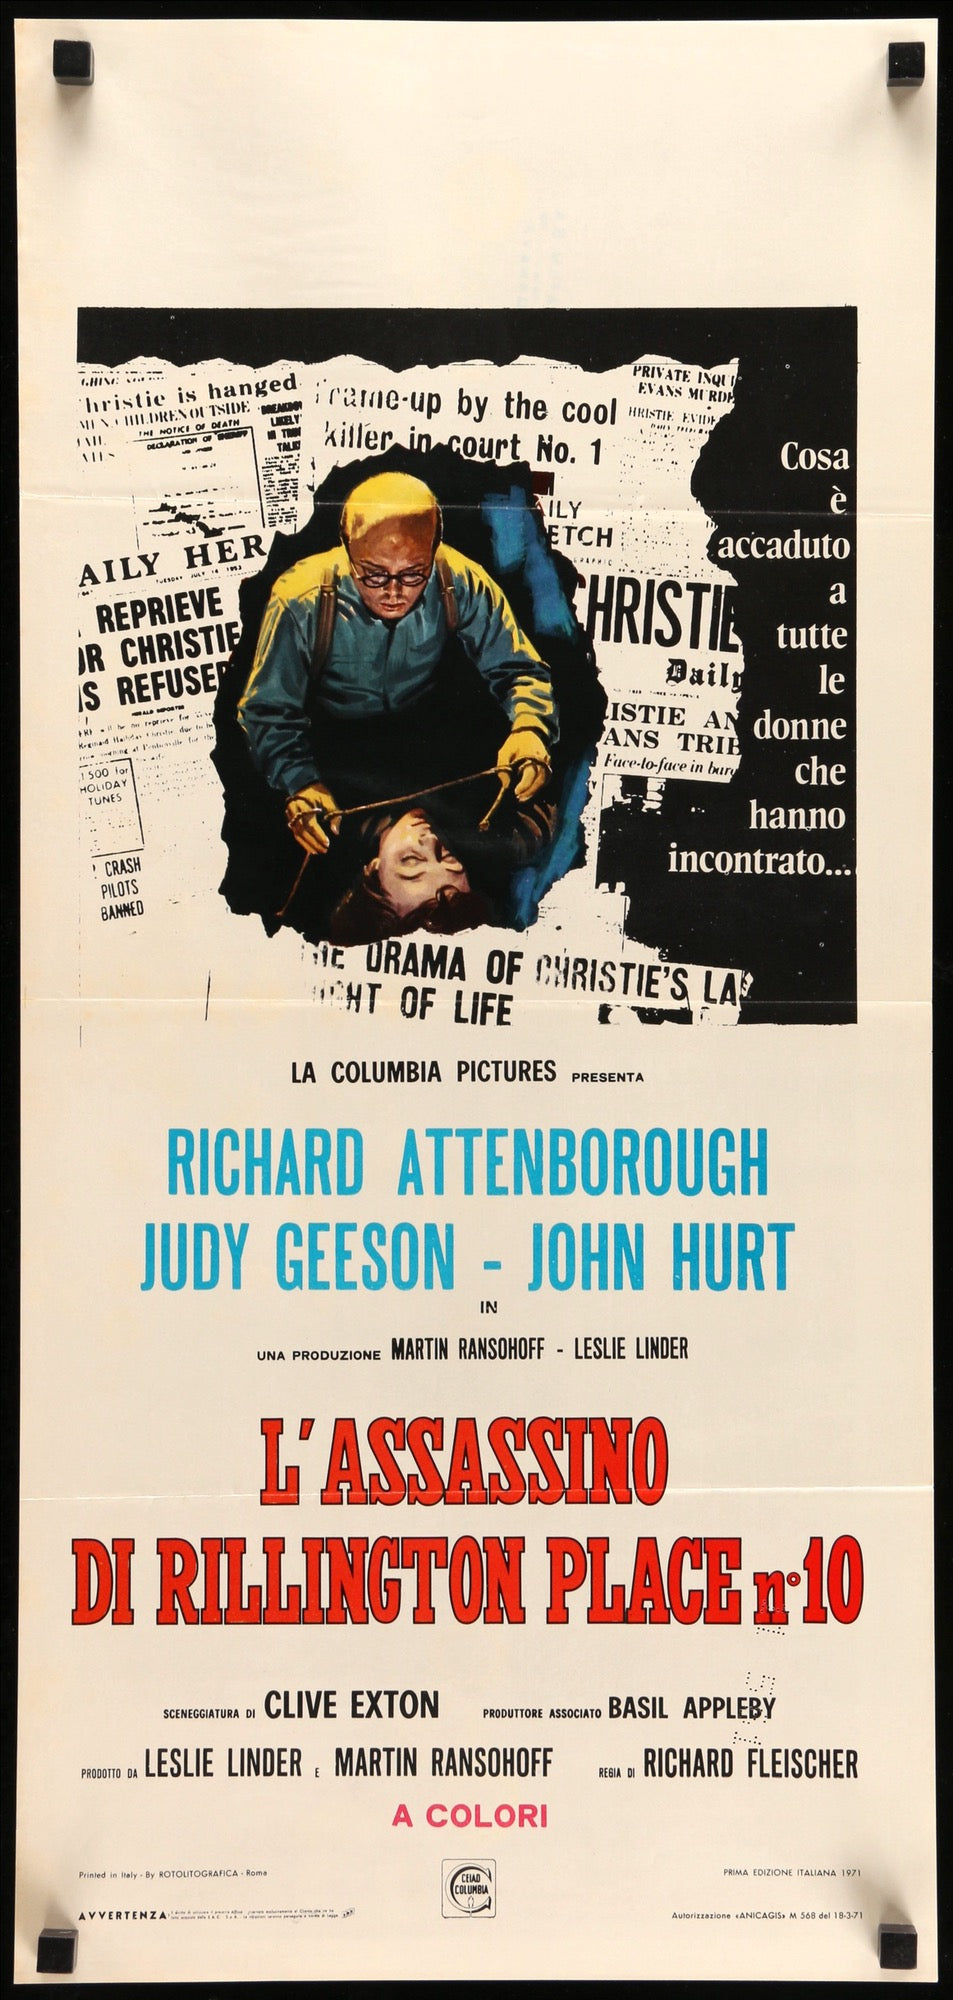 10 Rillington Place (1971) original movie poster for sale at Original Film Art